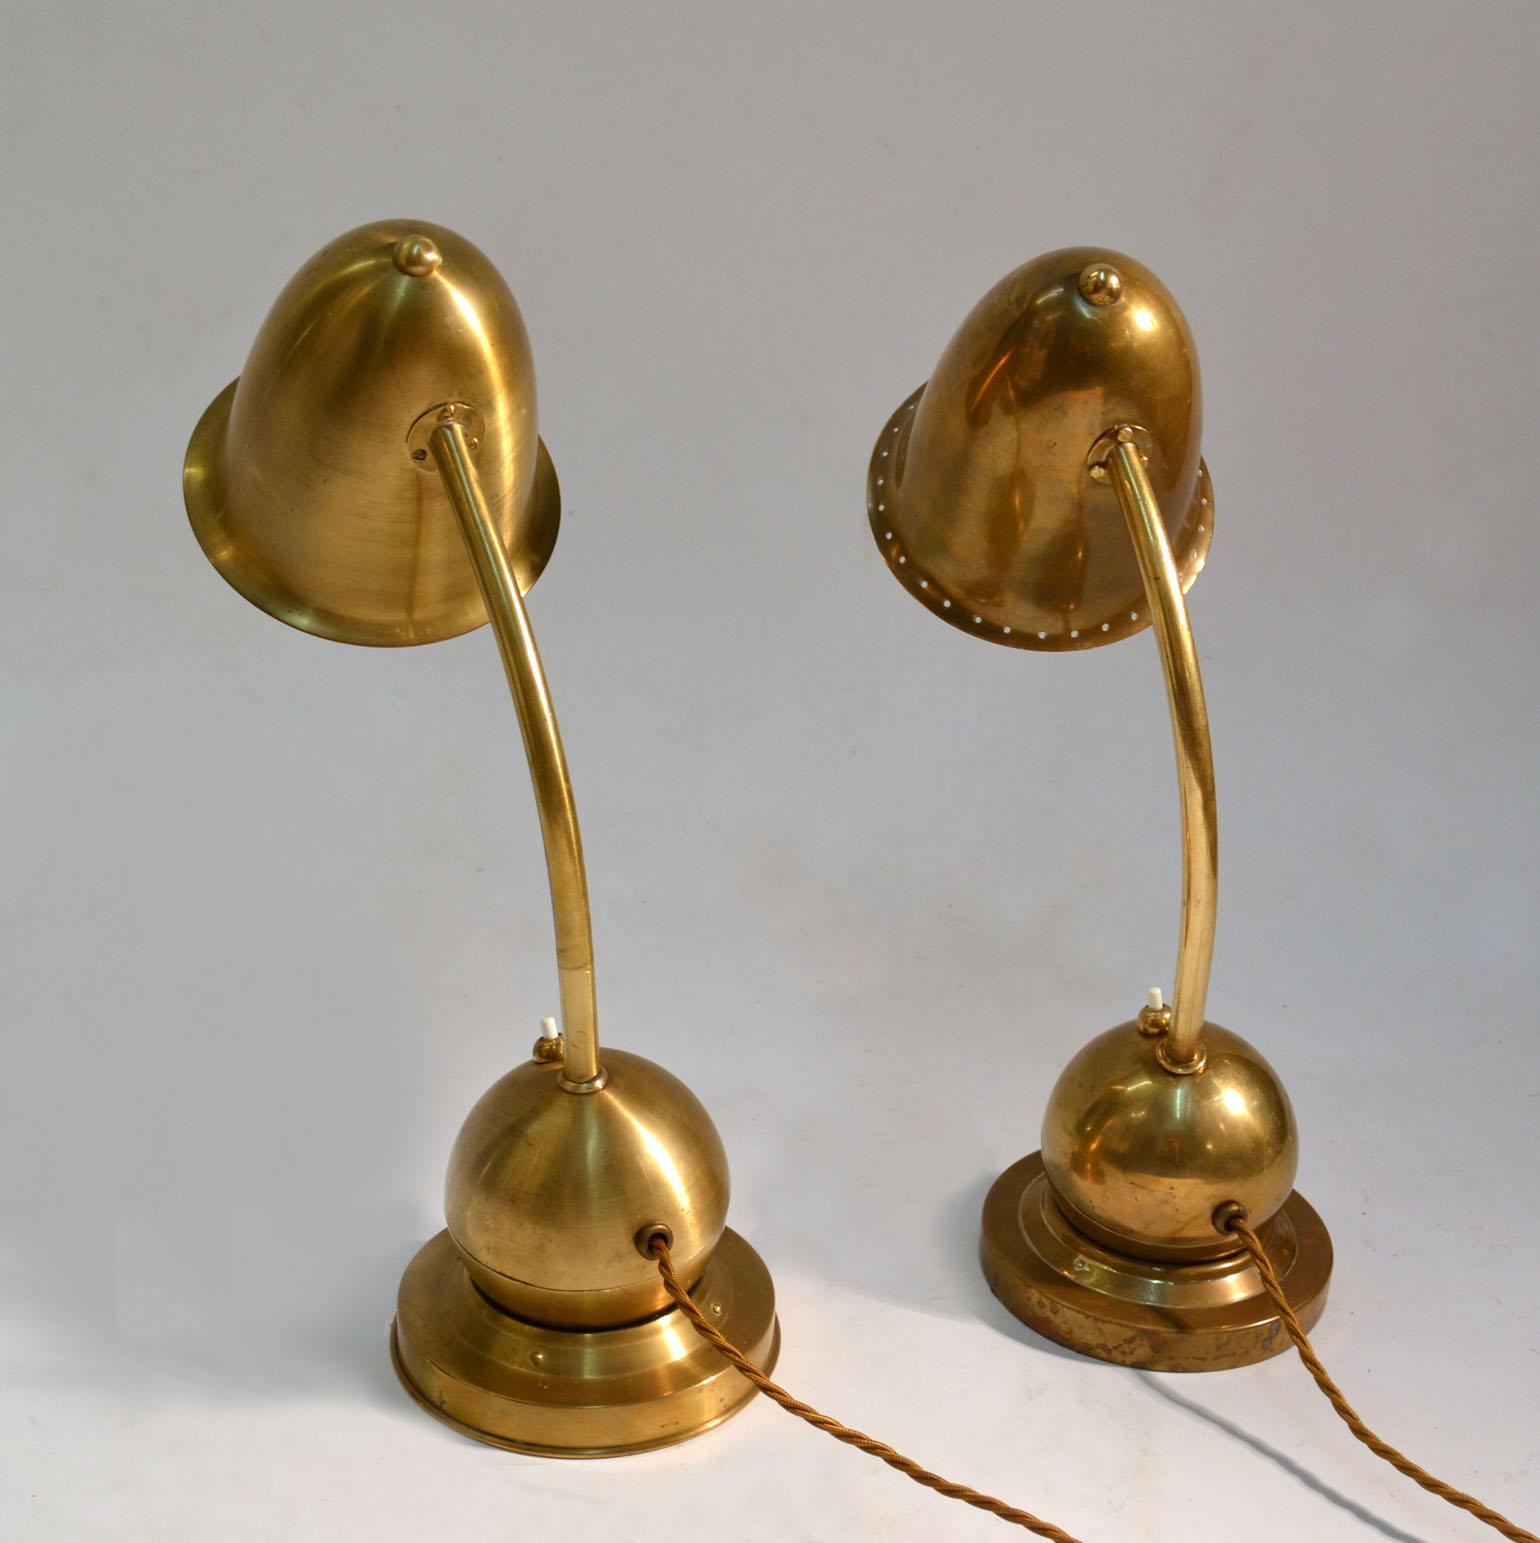 Art Deco Pair of Modernist Brass Table / Desk Lamps 1930s Lamps by Daalderop Netherlands